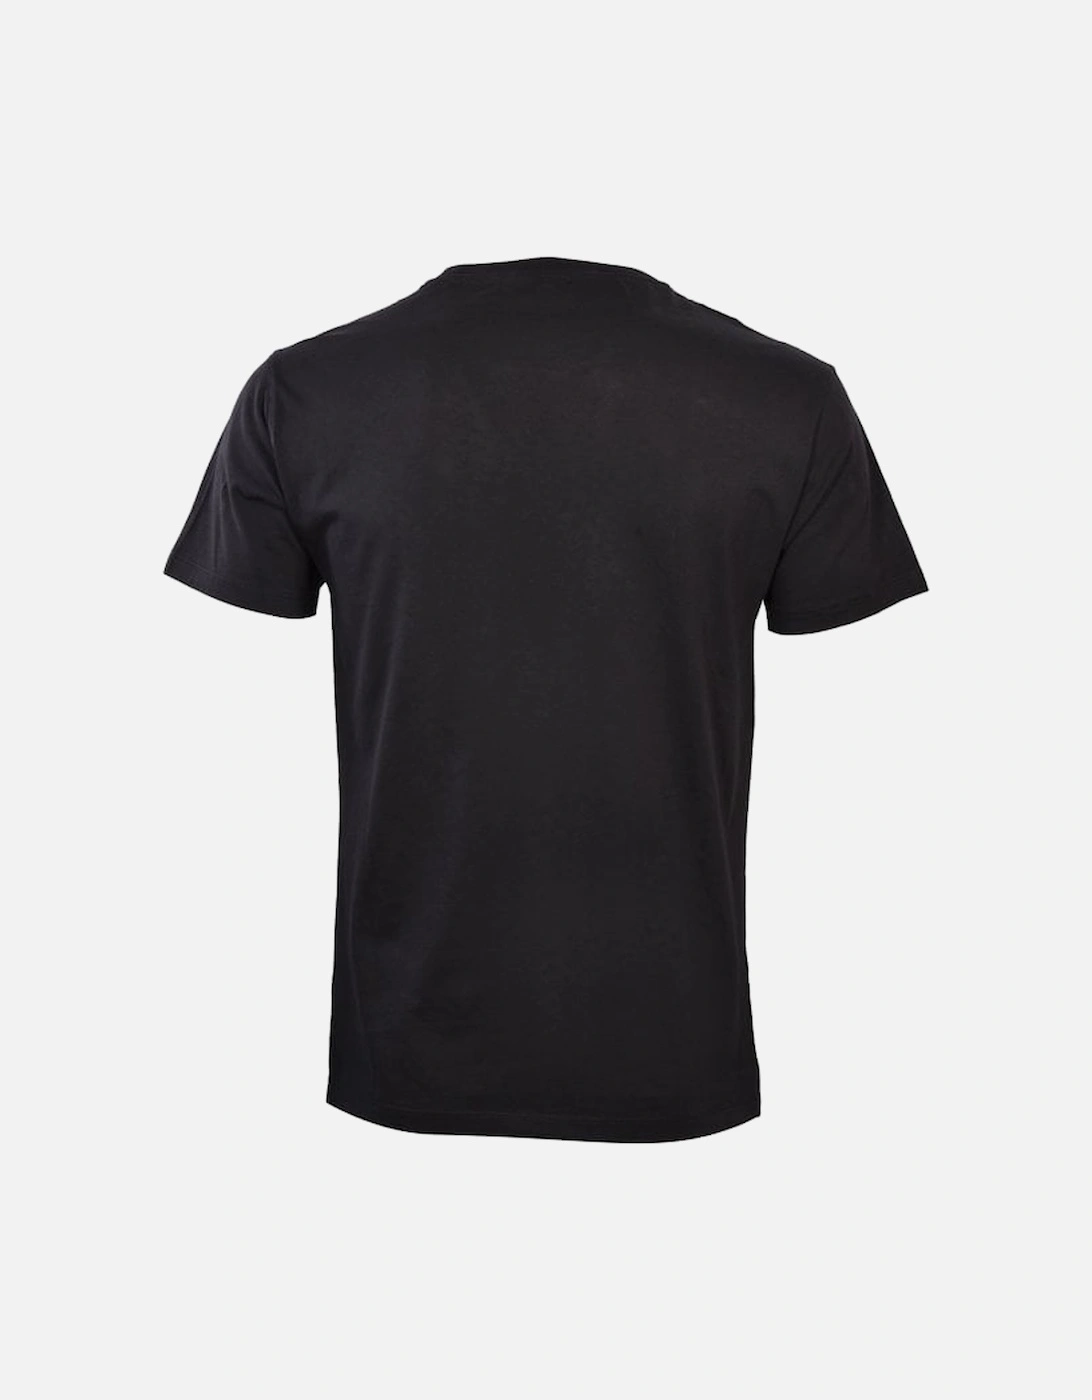 Pocket T-Shirt, Black